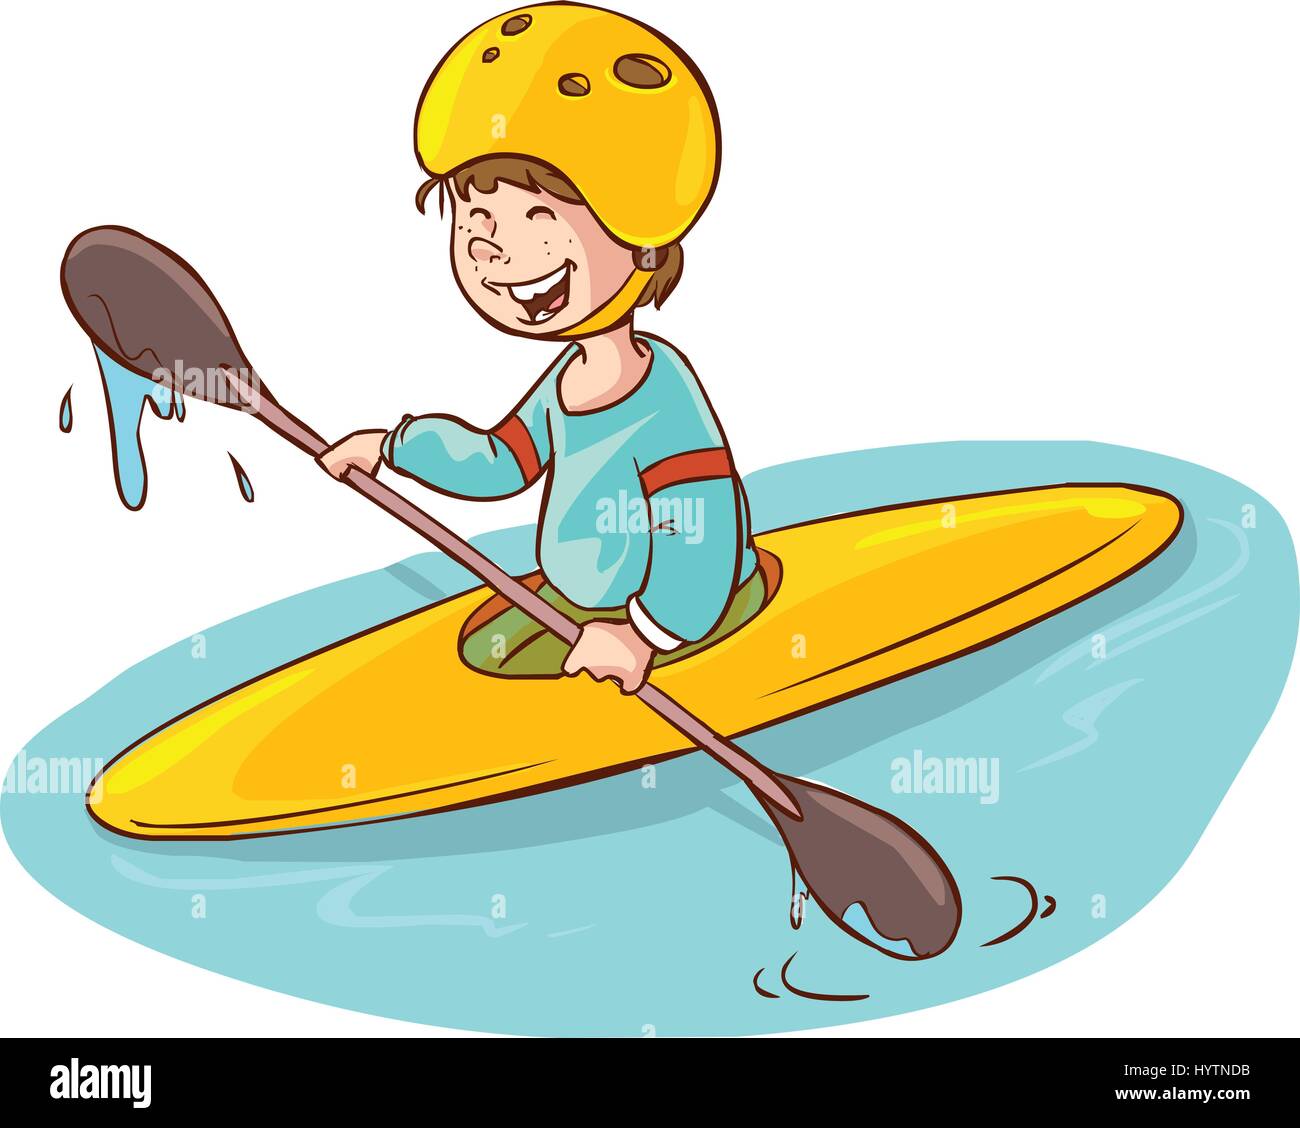 animated kayak clipart - photo #23